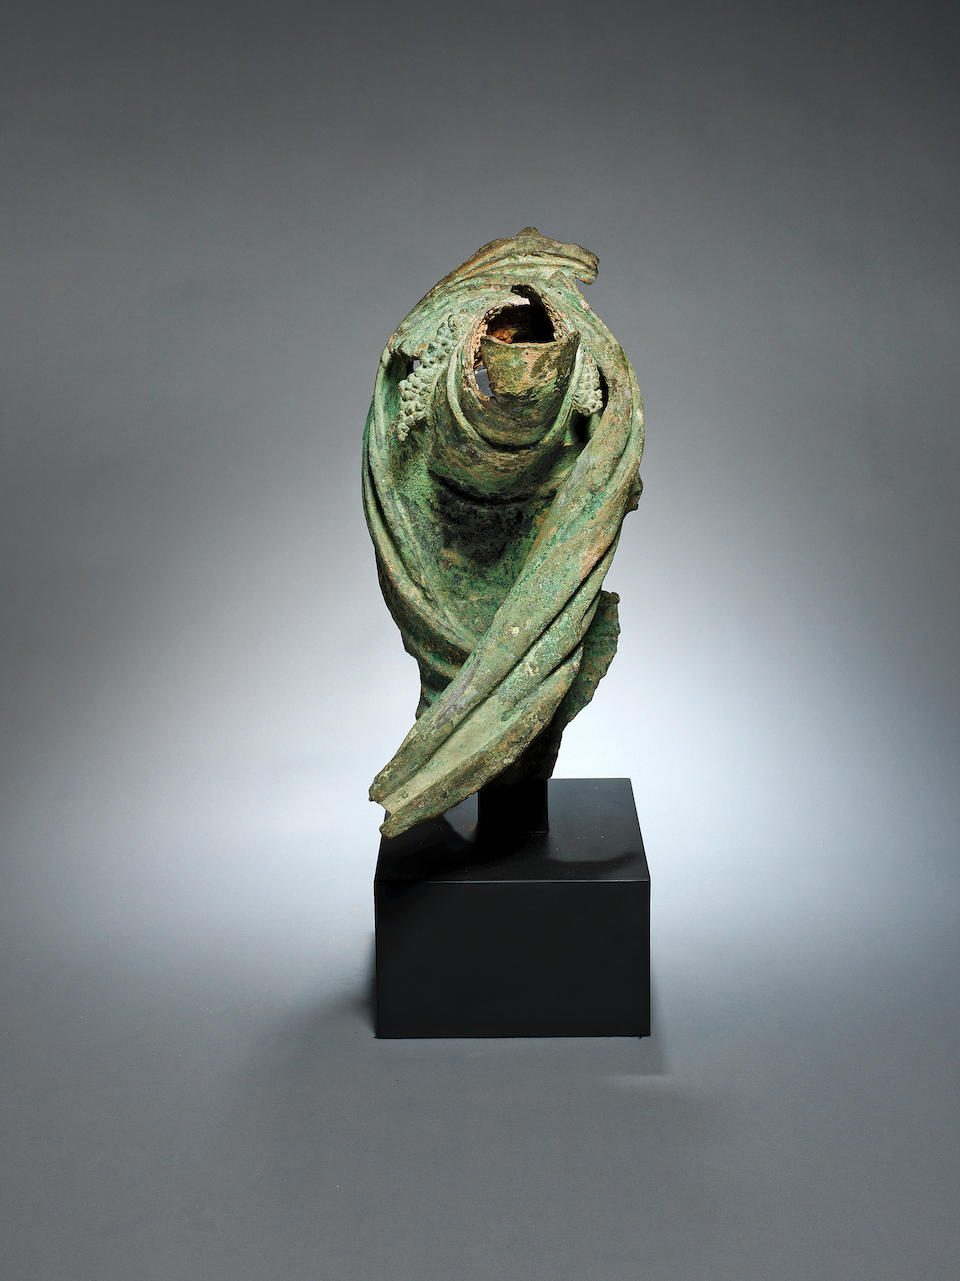 A Hellenistic bronze statue fragment